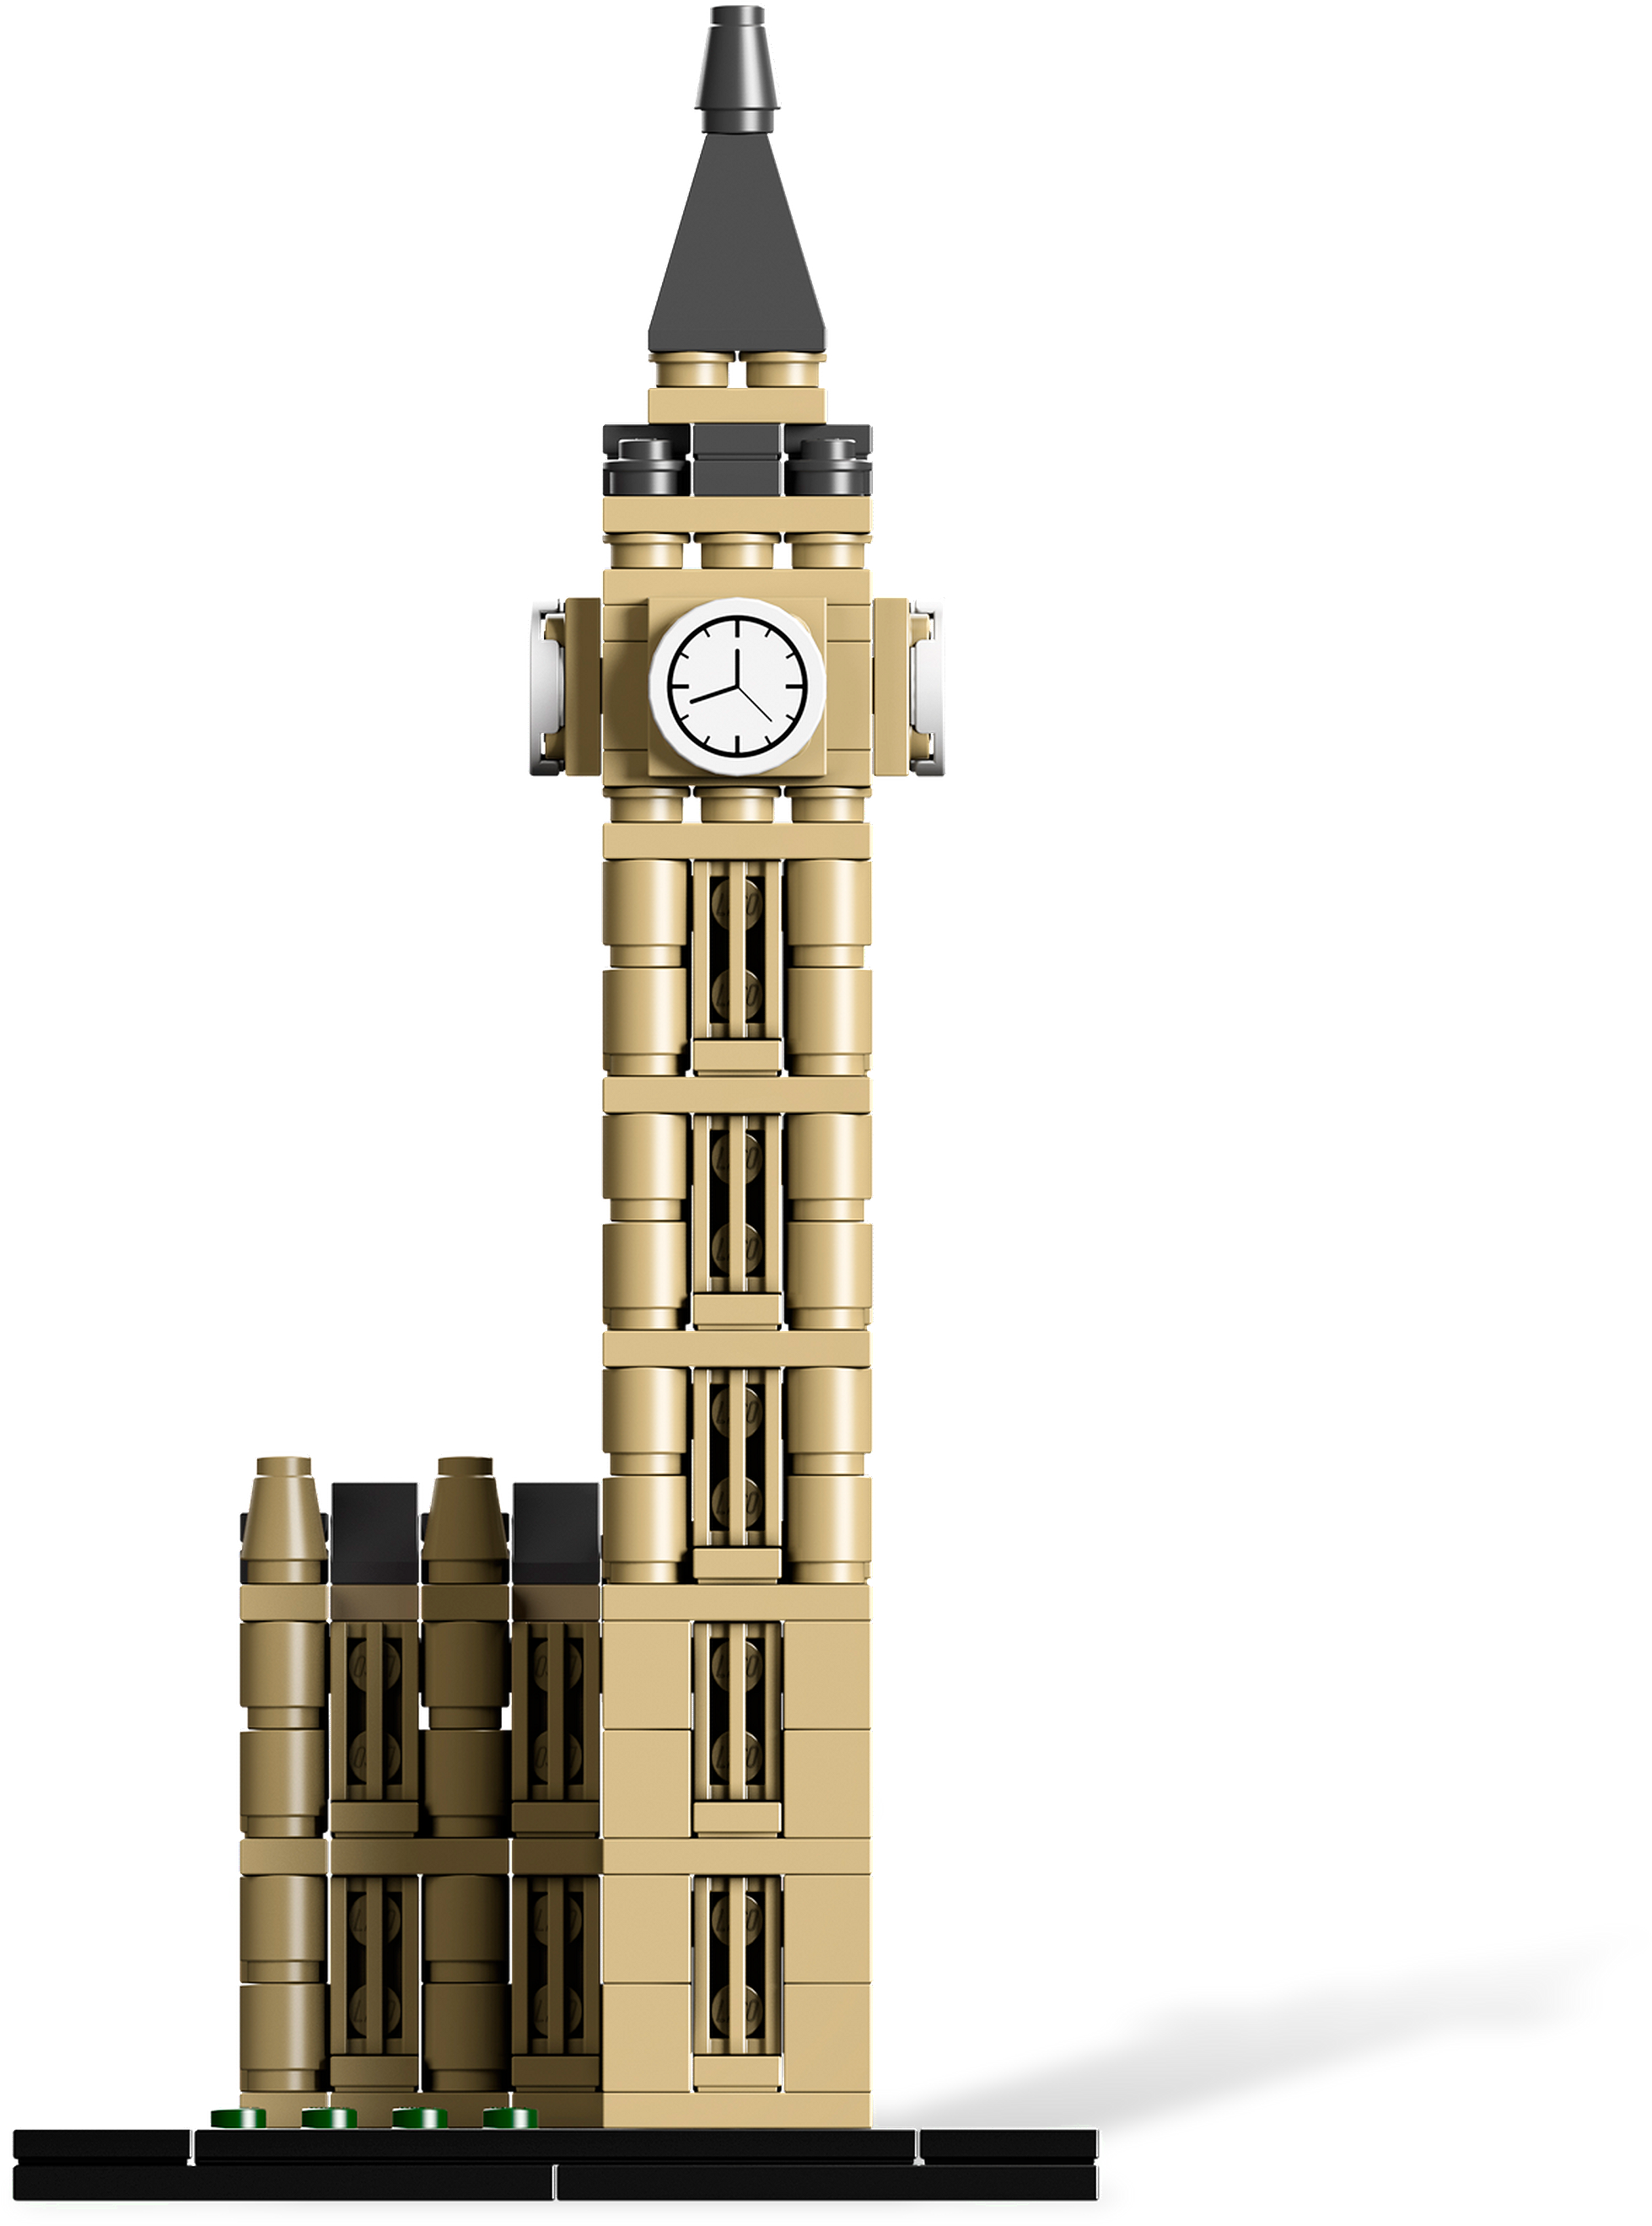 Lego Architecture Big Ben (4000x3000)